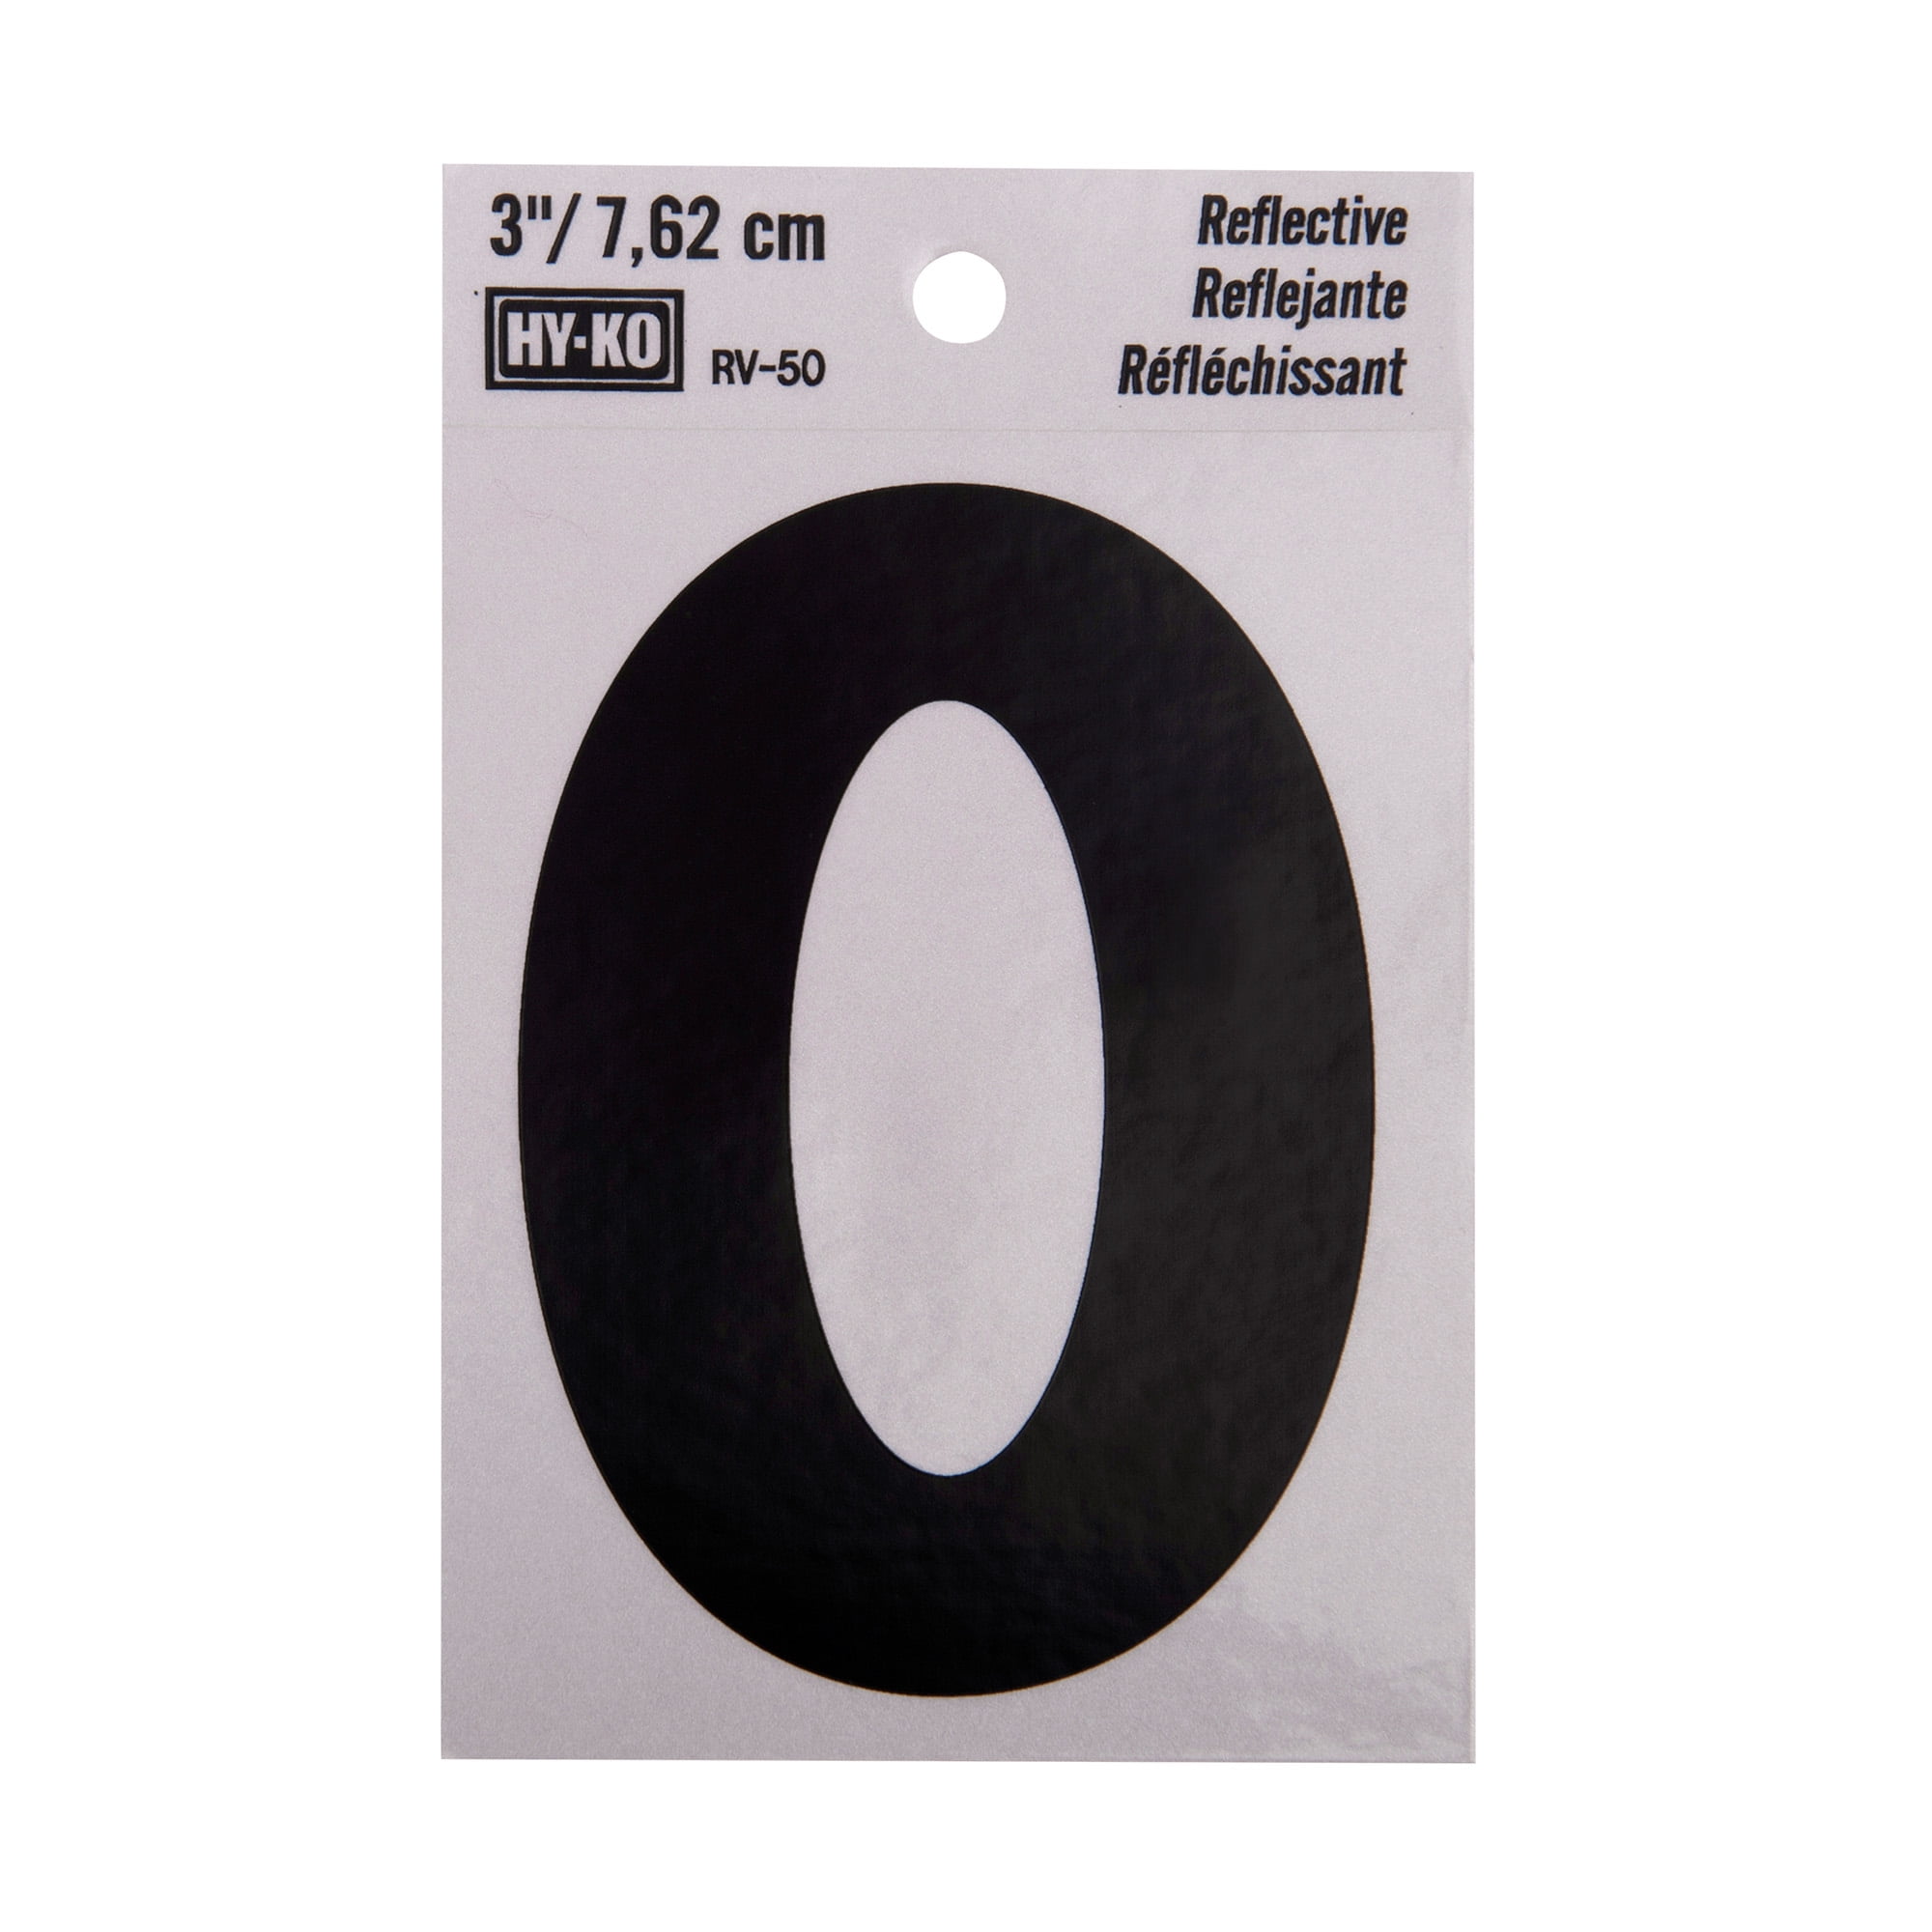 HY-KO 3" Reflective Vinyl Number 0, Self-adhesive, Weather-resistant